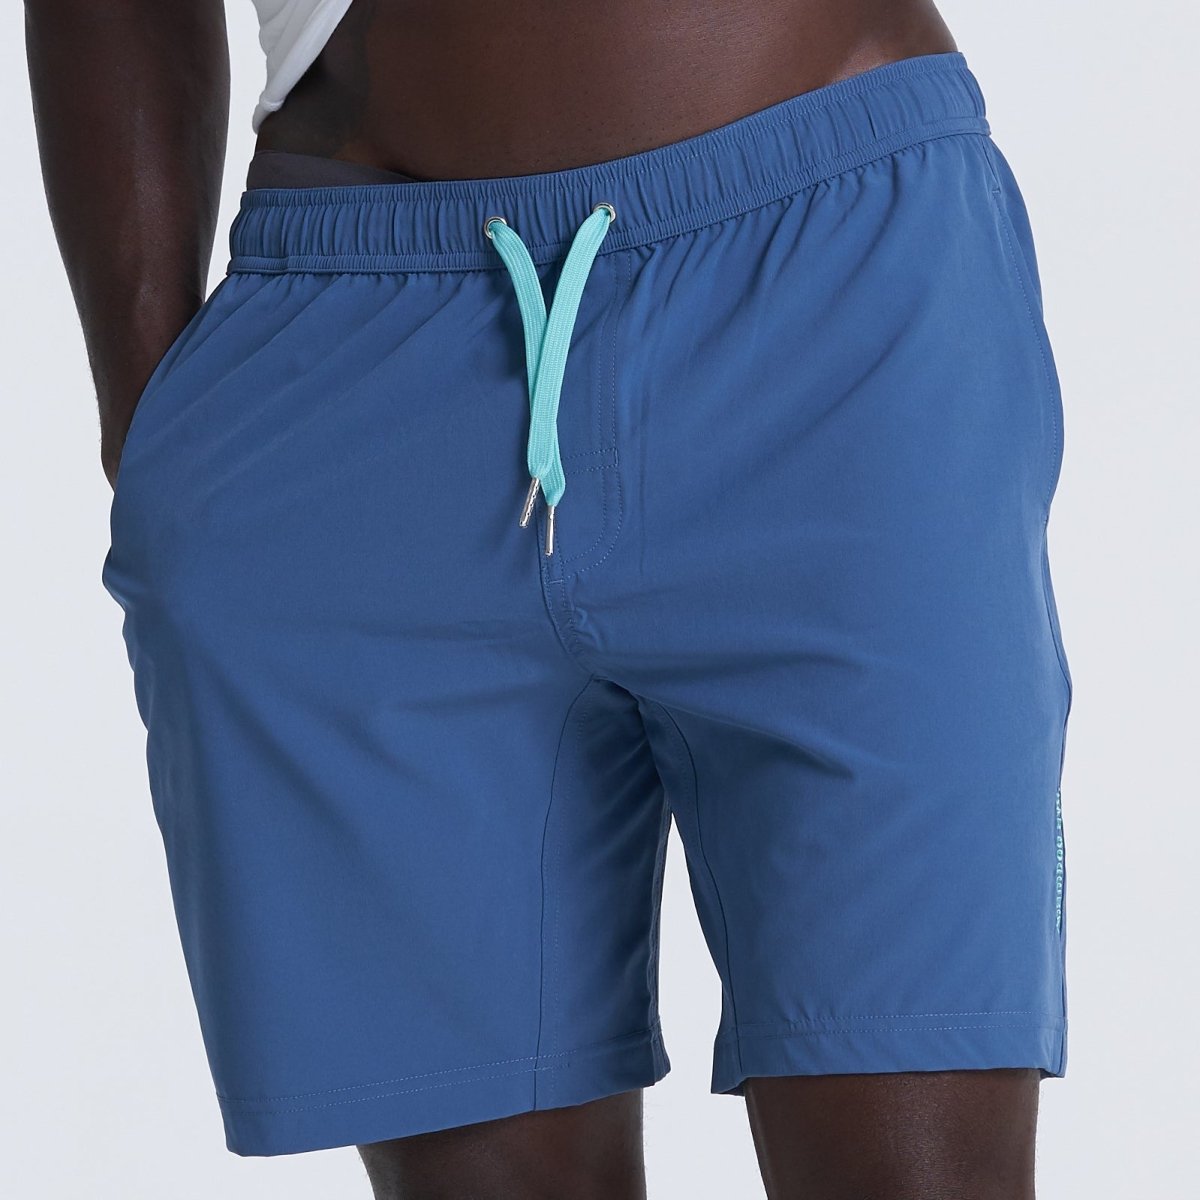 Heat Waves 7" - Blue Shorts - Bamboo Ave. - Men's Shorts